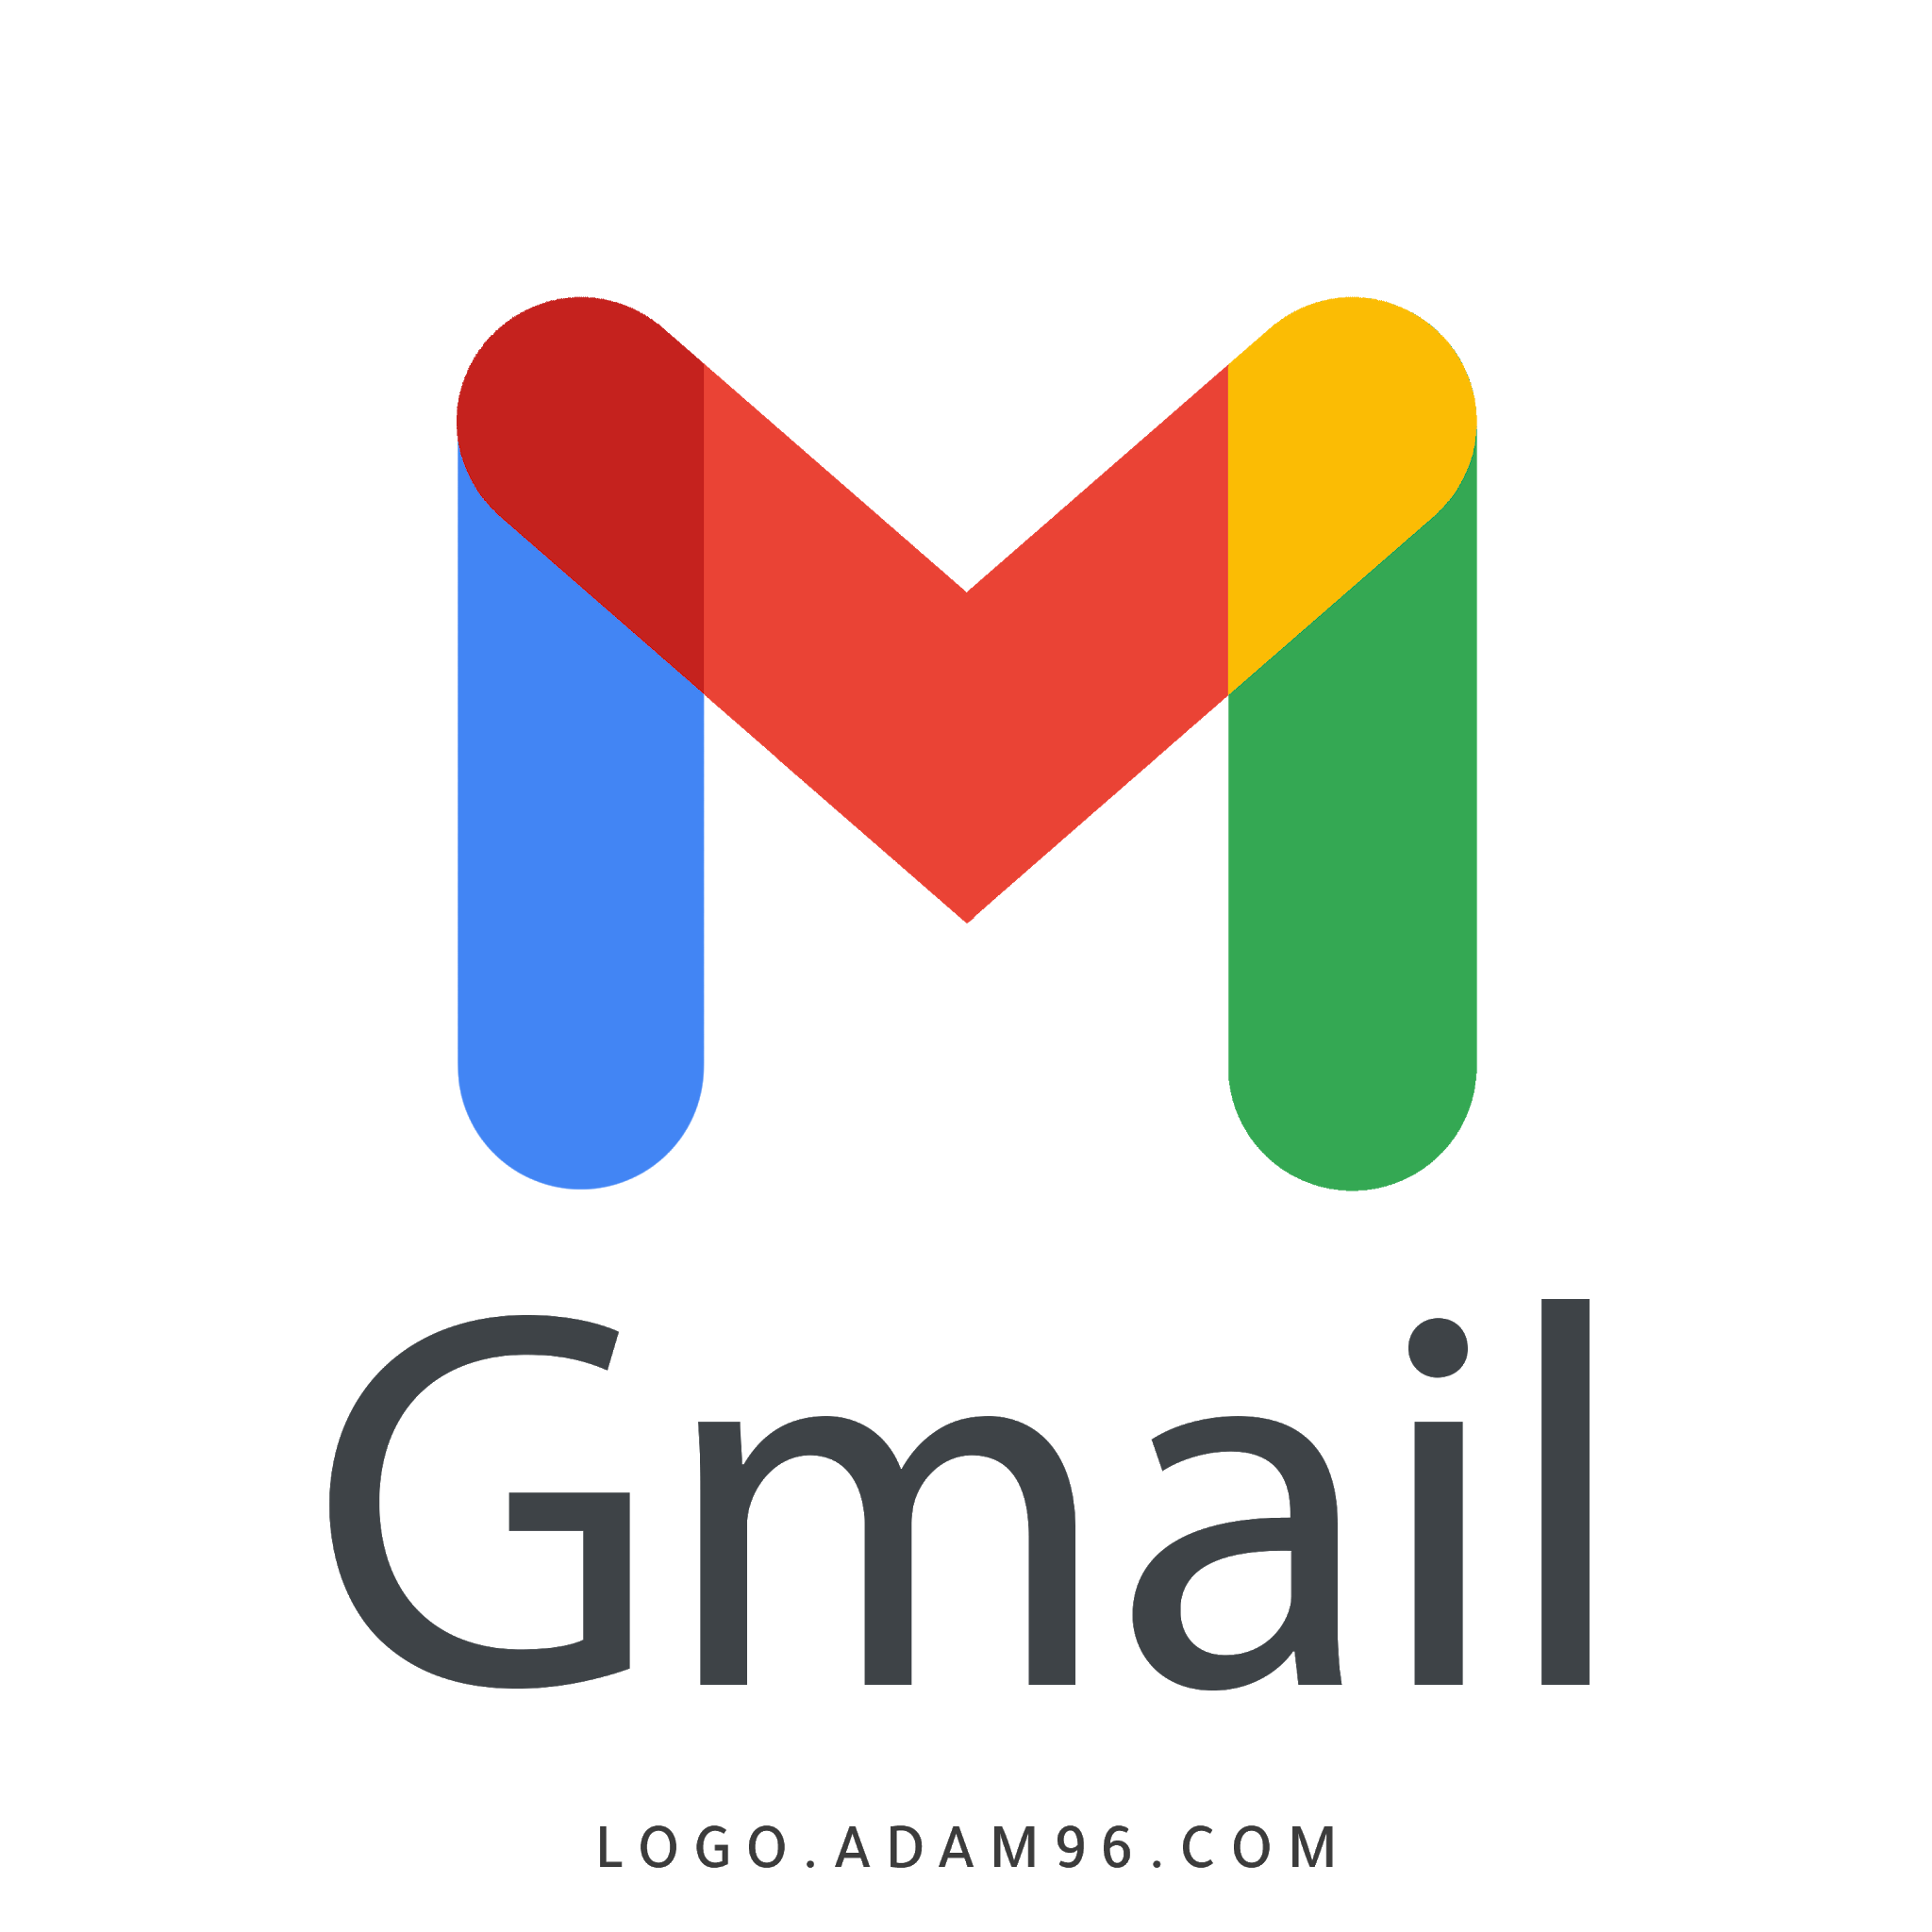 Download The New Gmail Logo Original Logo Png